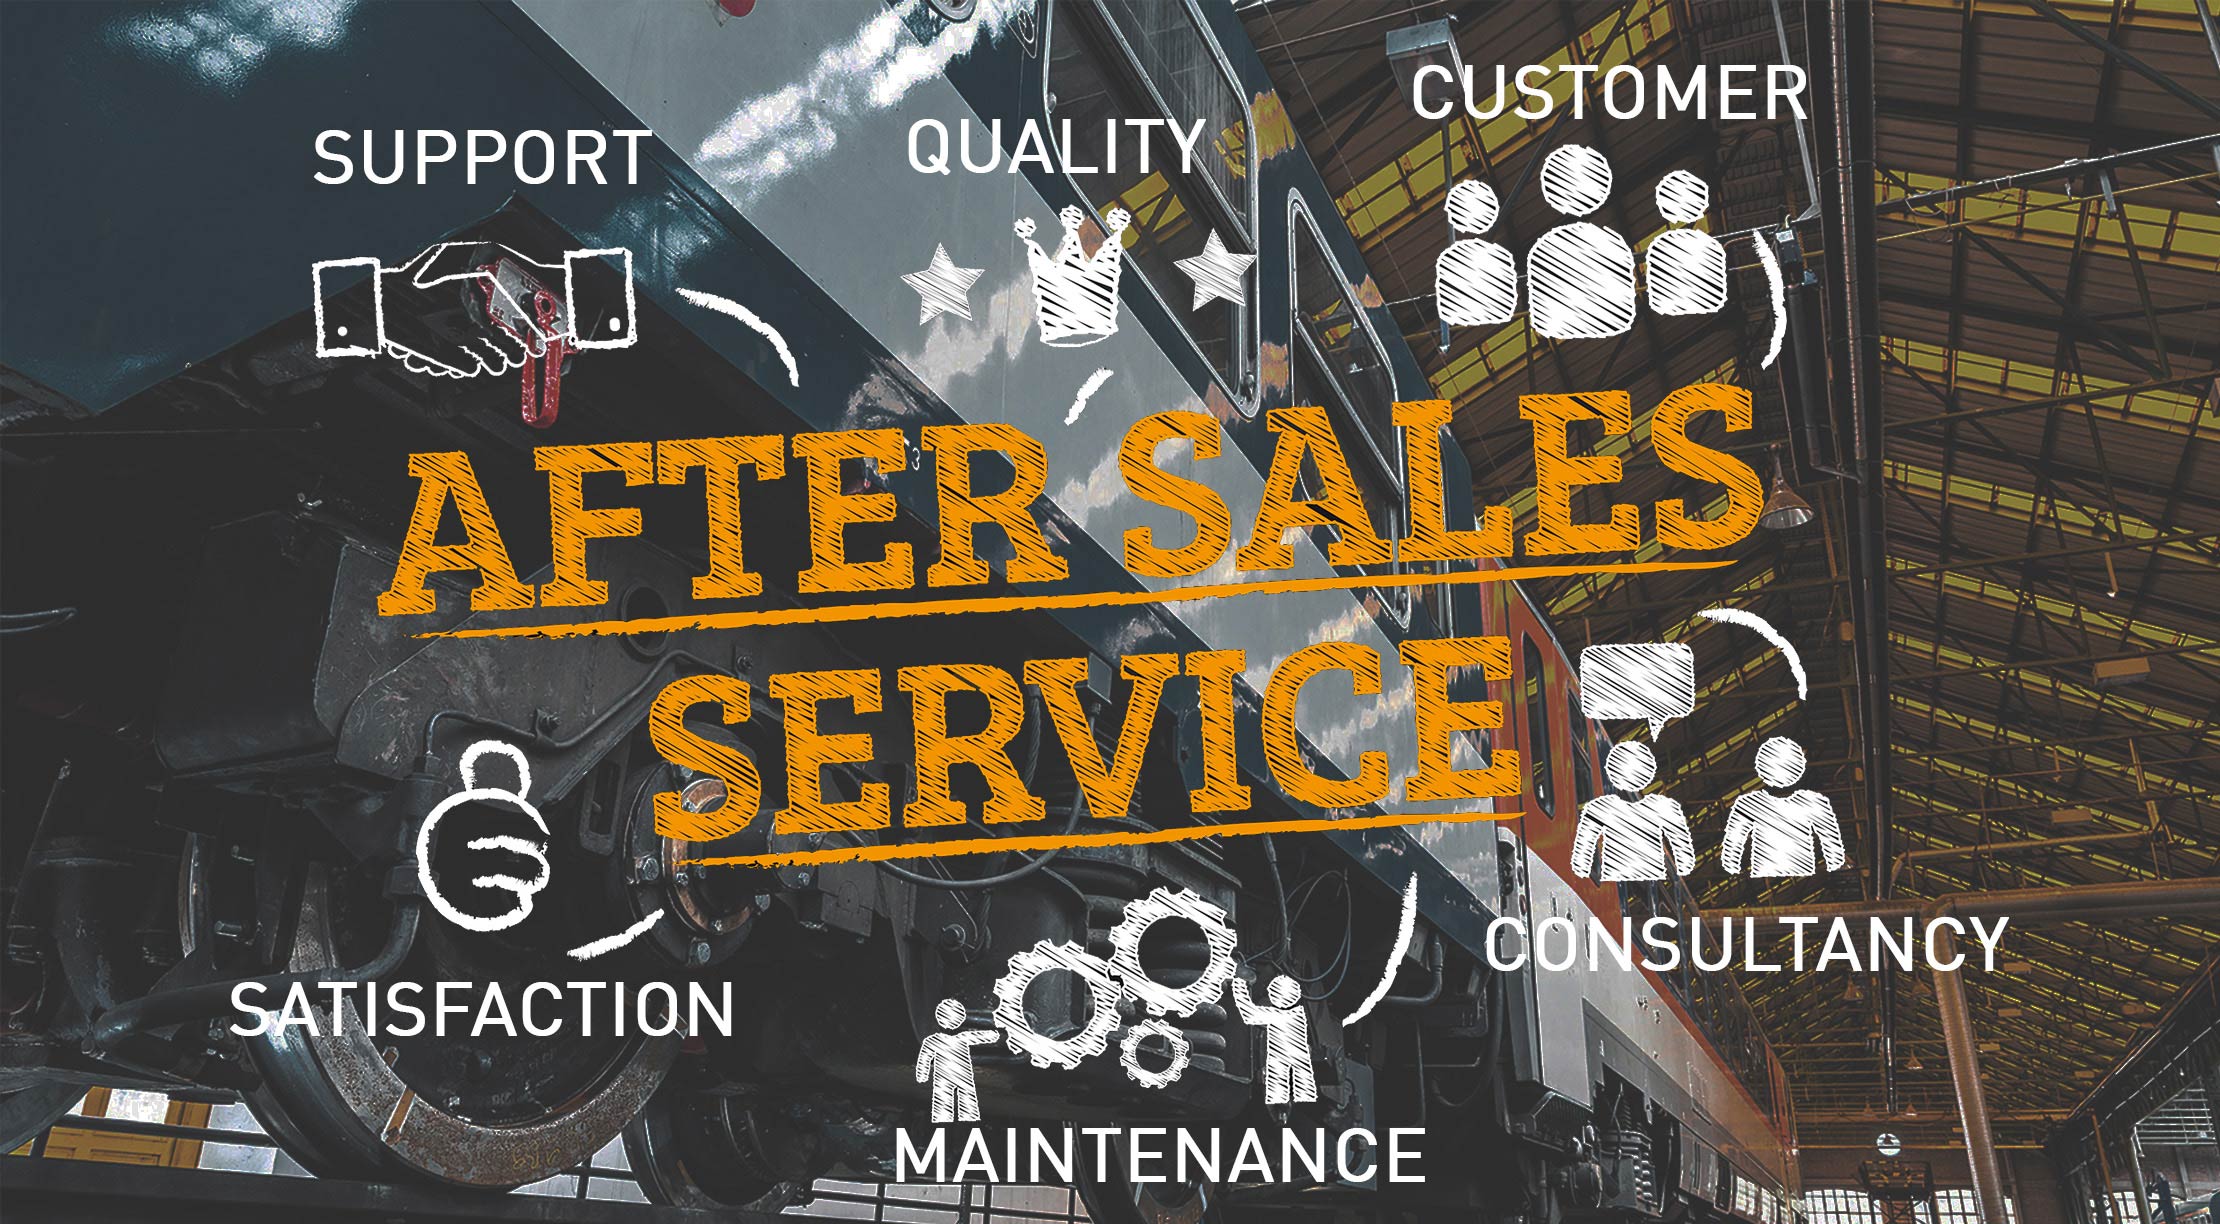 After sales service as competitive advantage